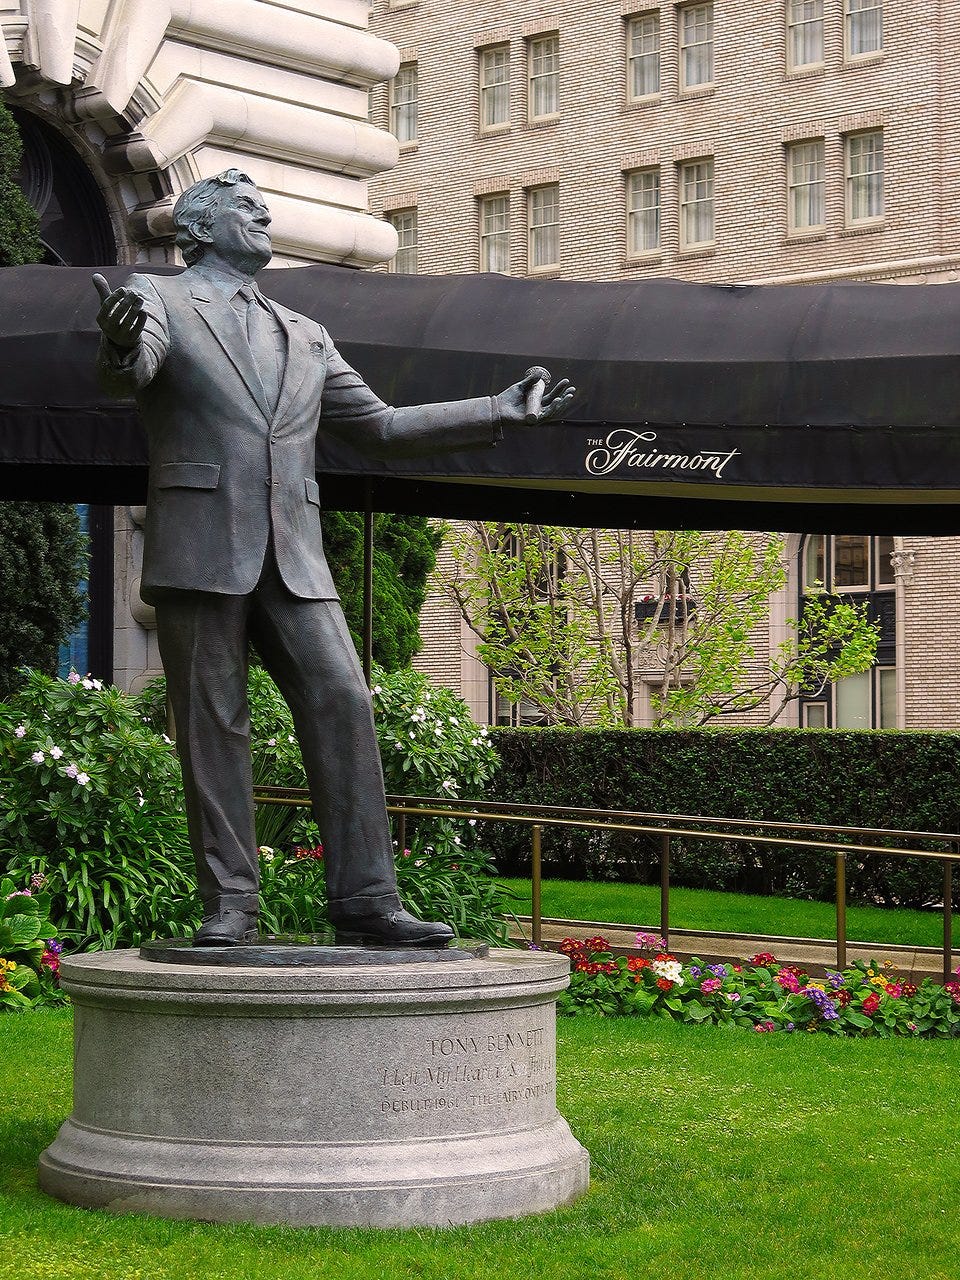 Tony Bennett statue outside the Fairmont Hotel in San Francisco